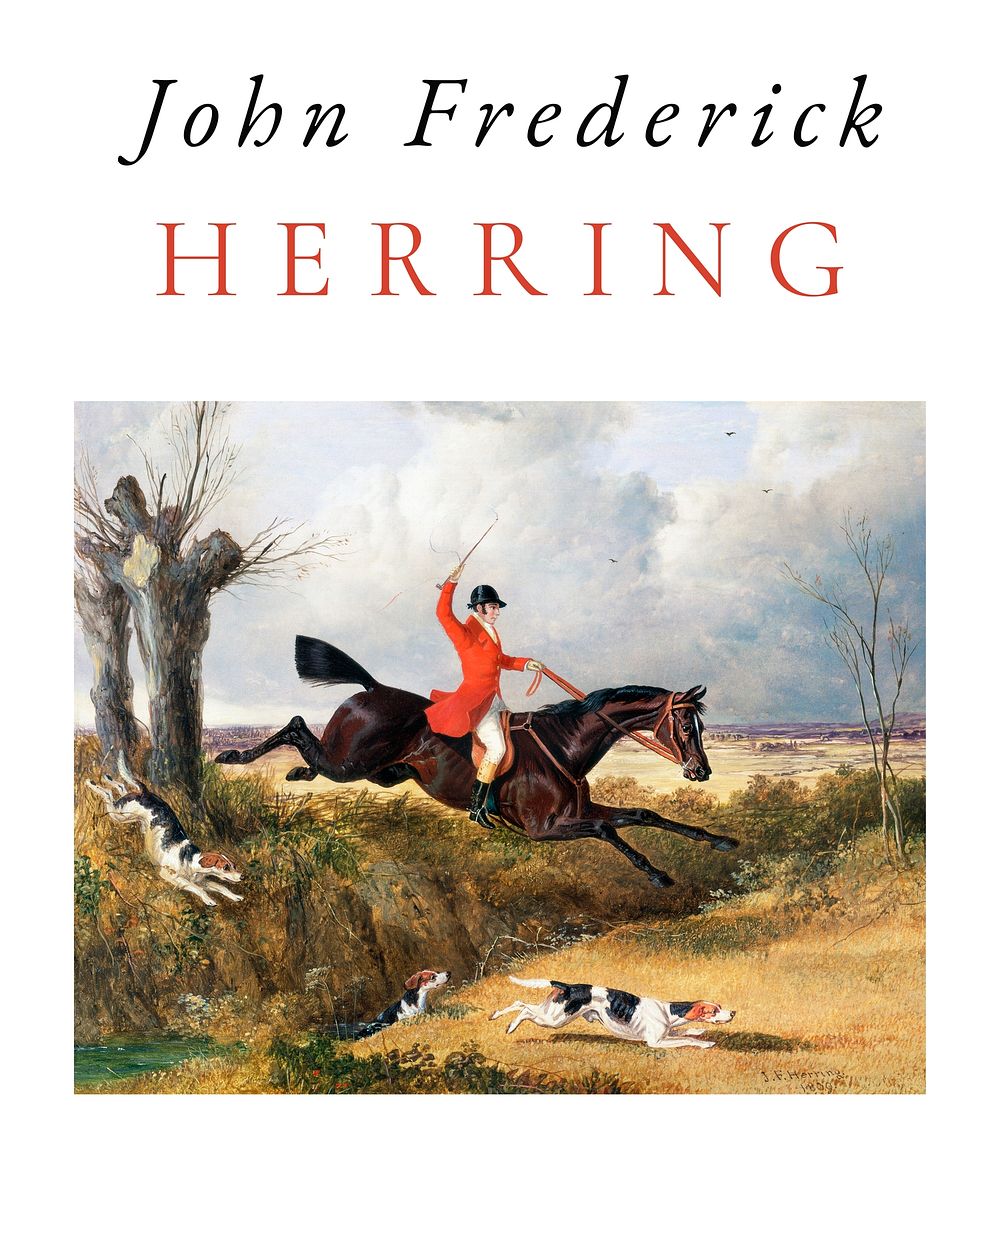 John Frederick Herring art print, vintage equestrian illustration